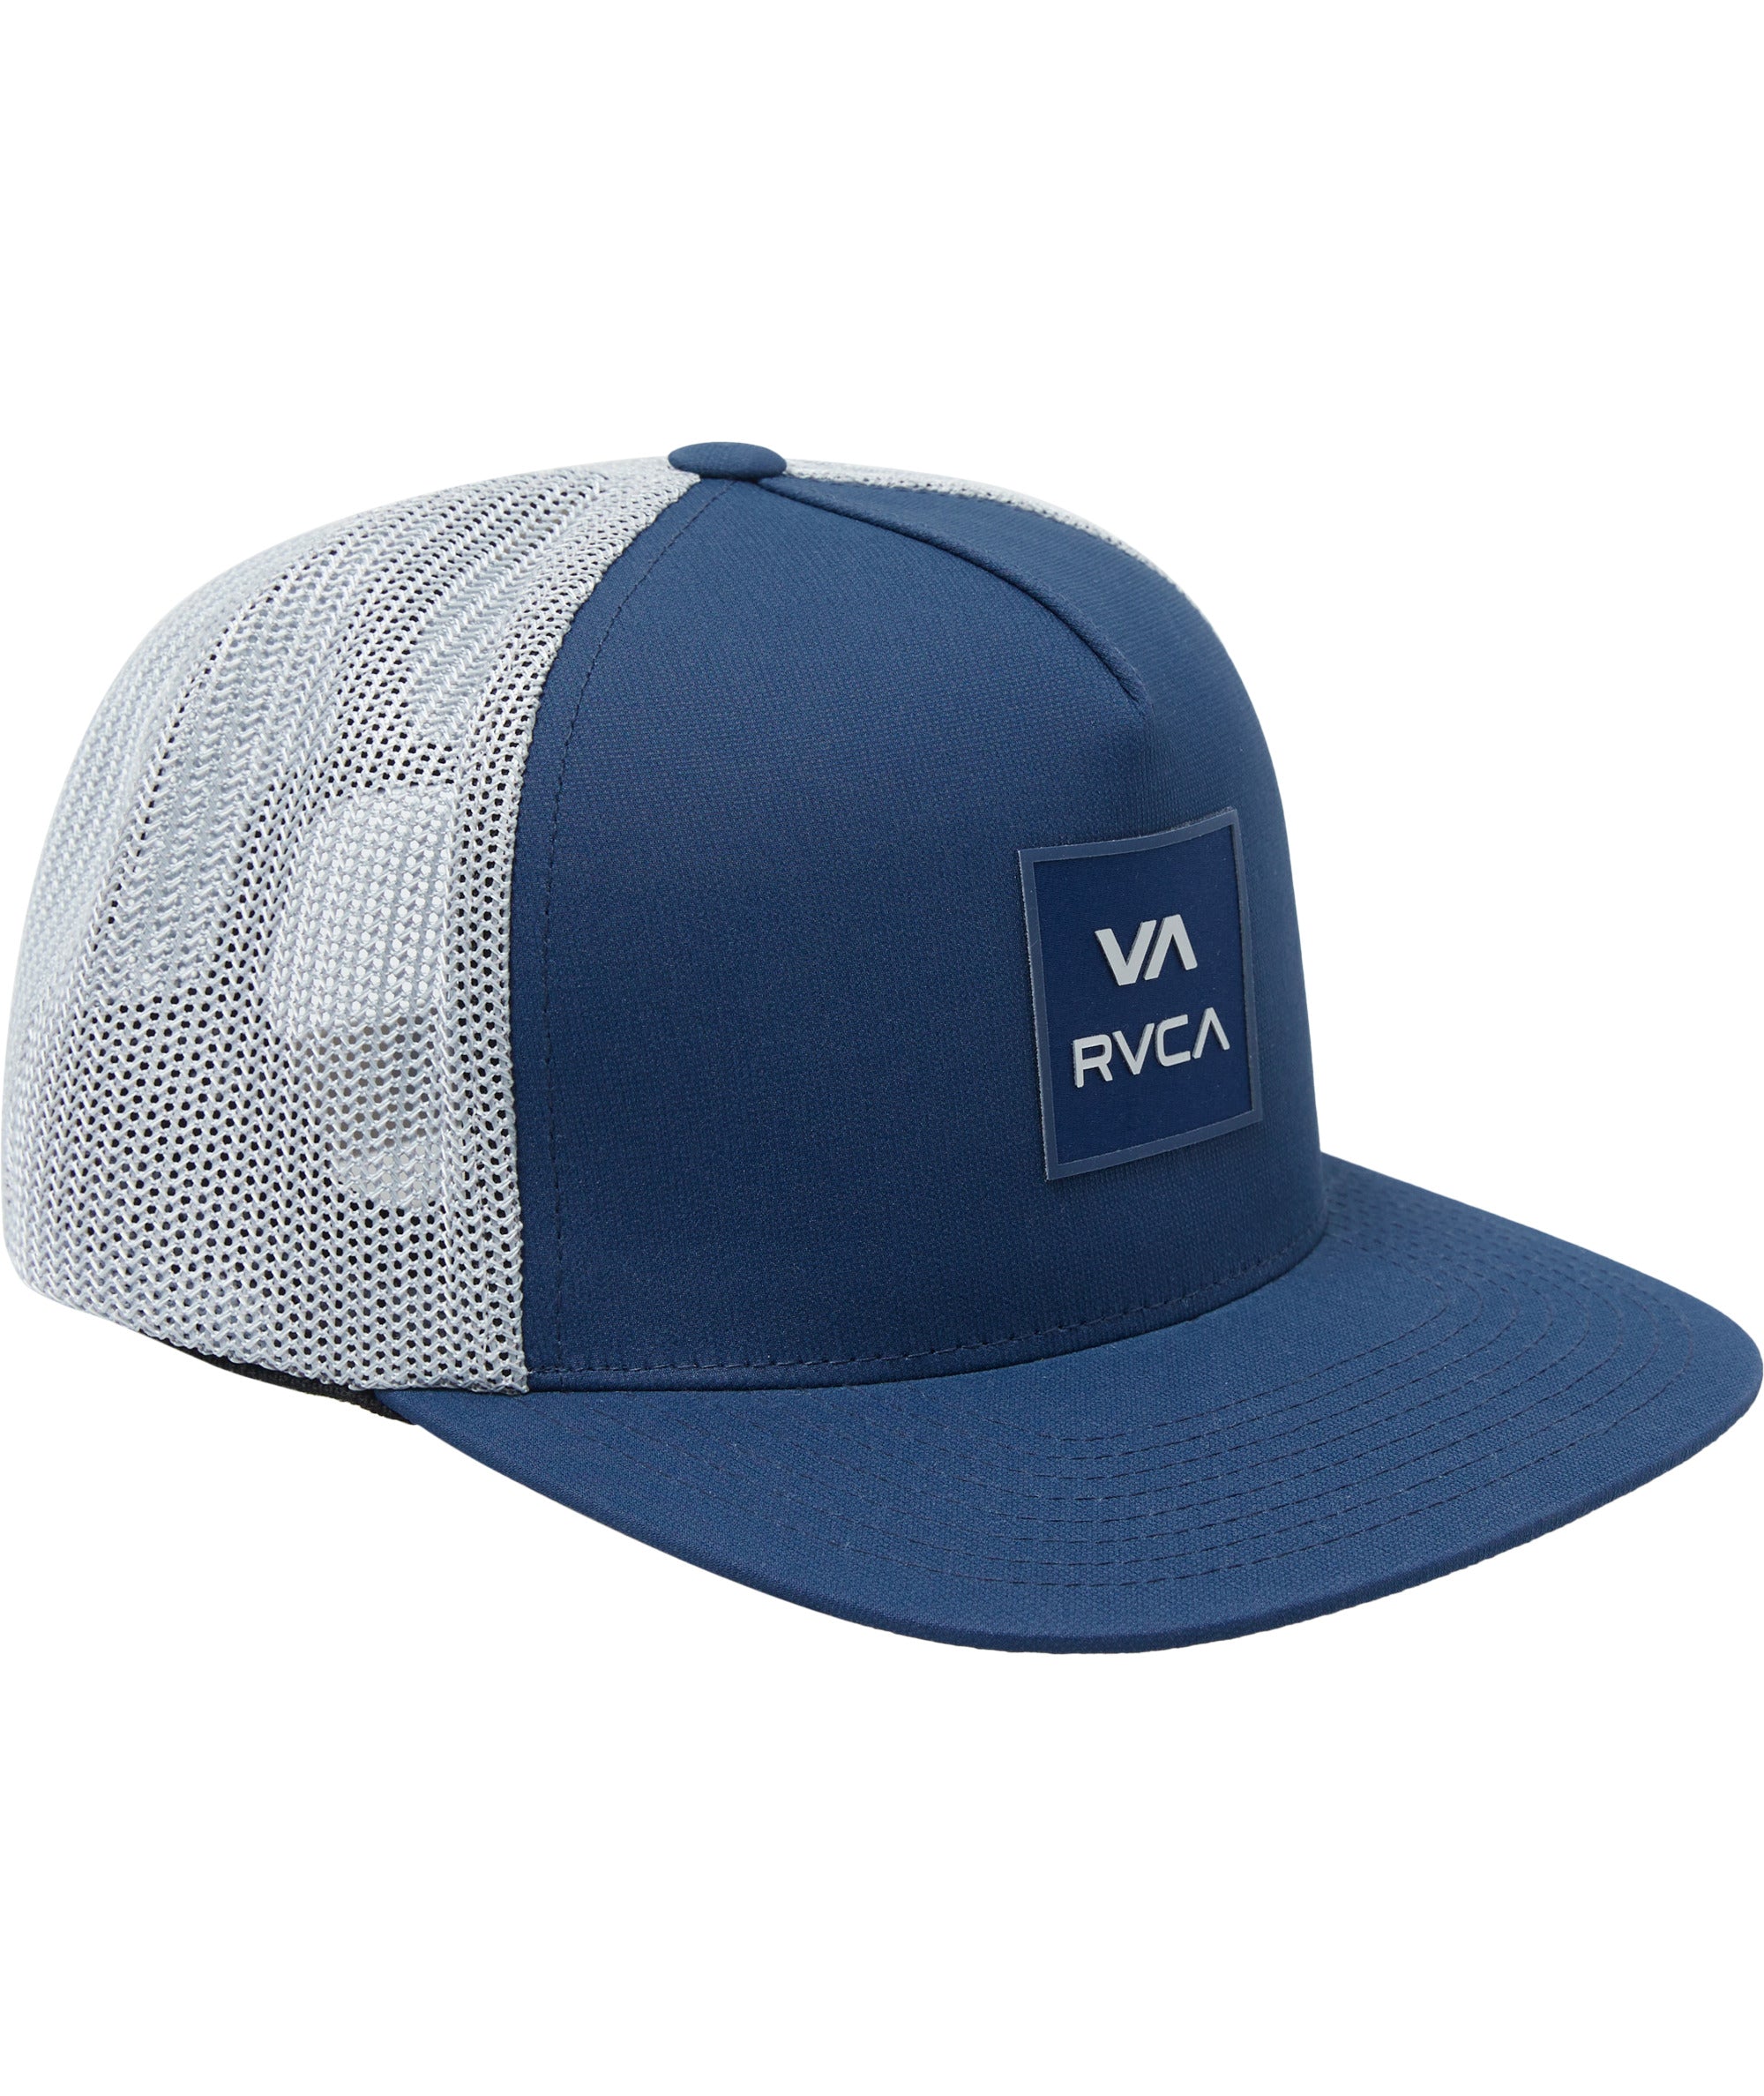 RVCA Men's All The Way Tech Trucker Hat